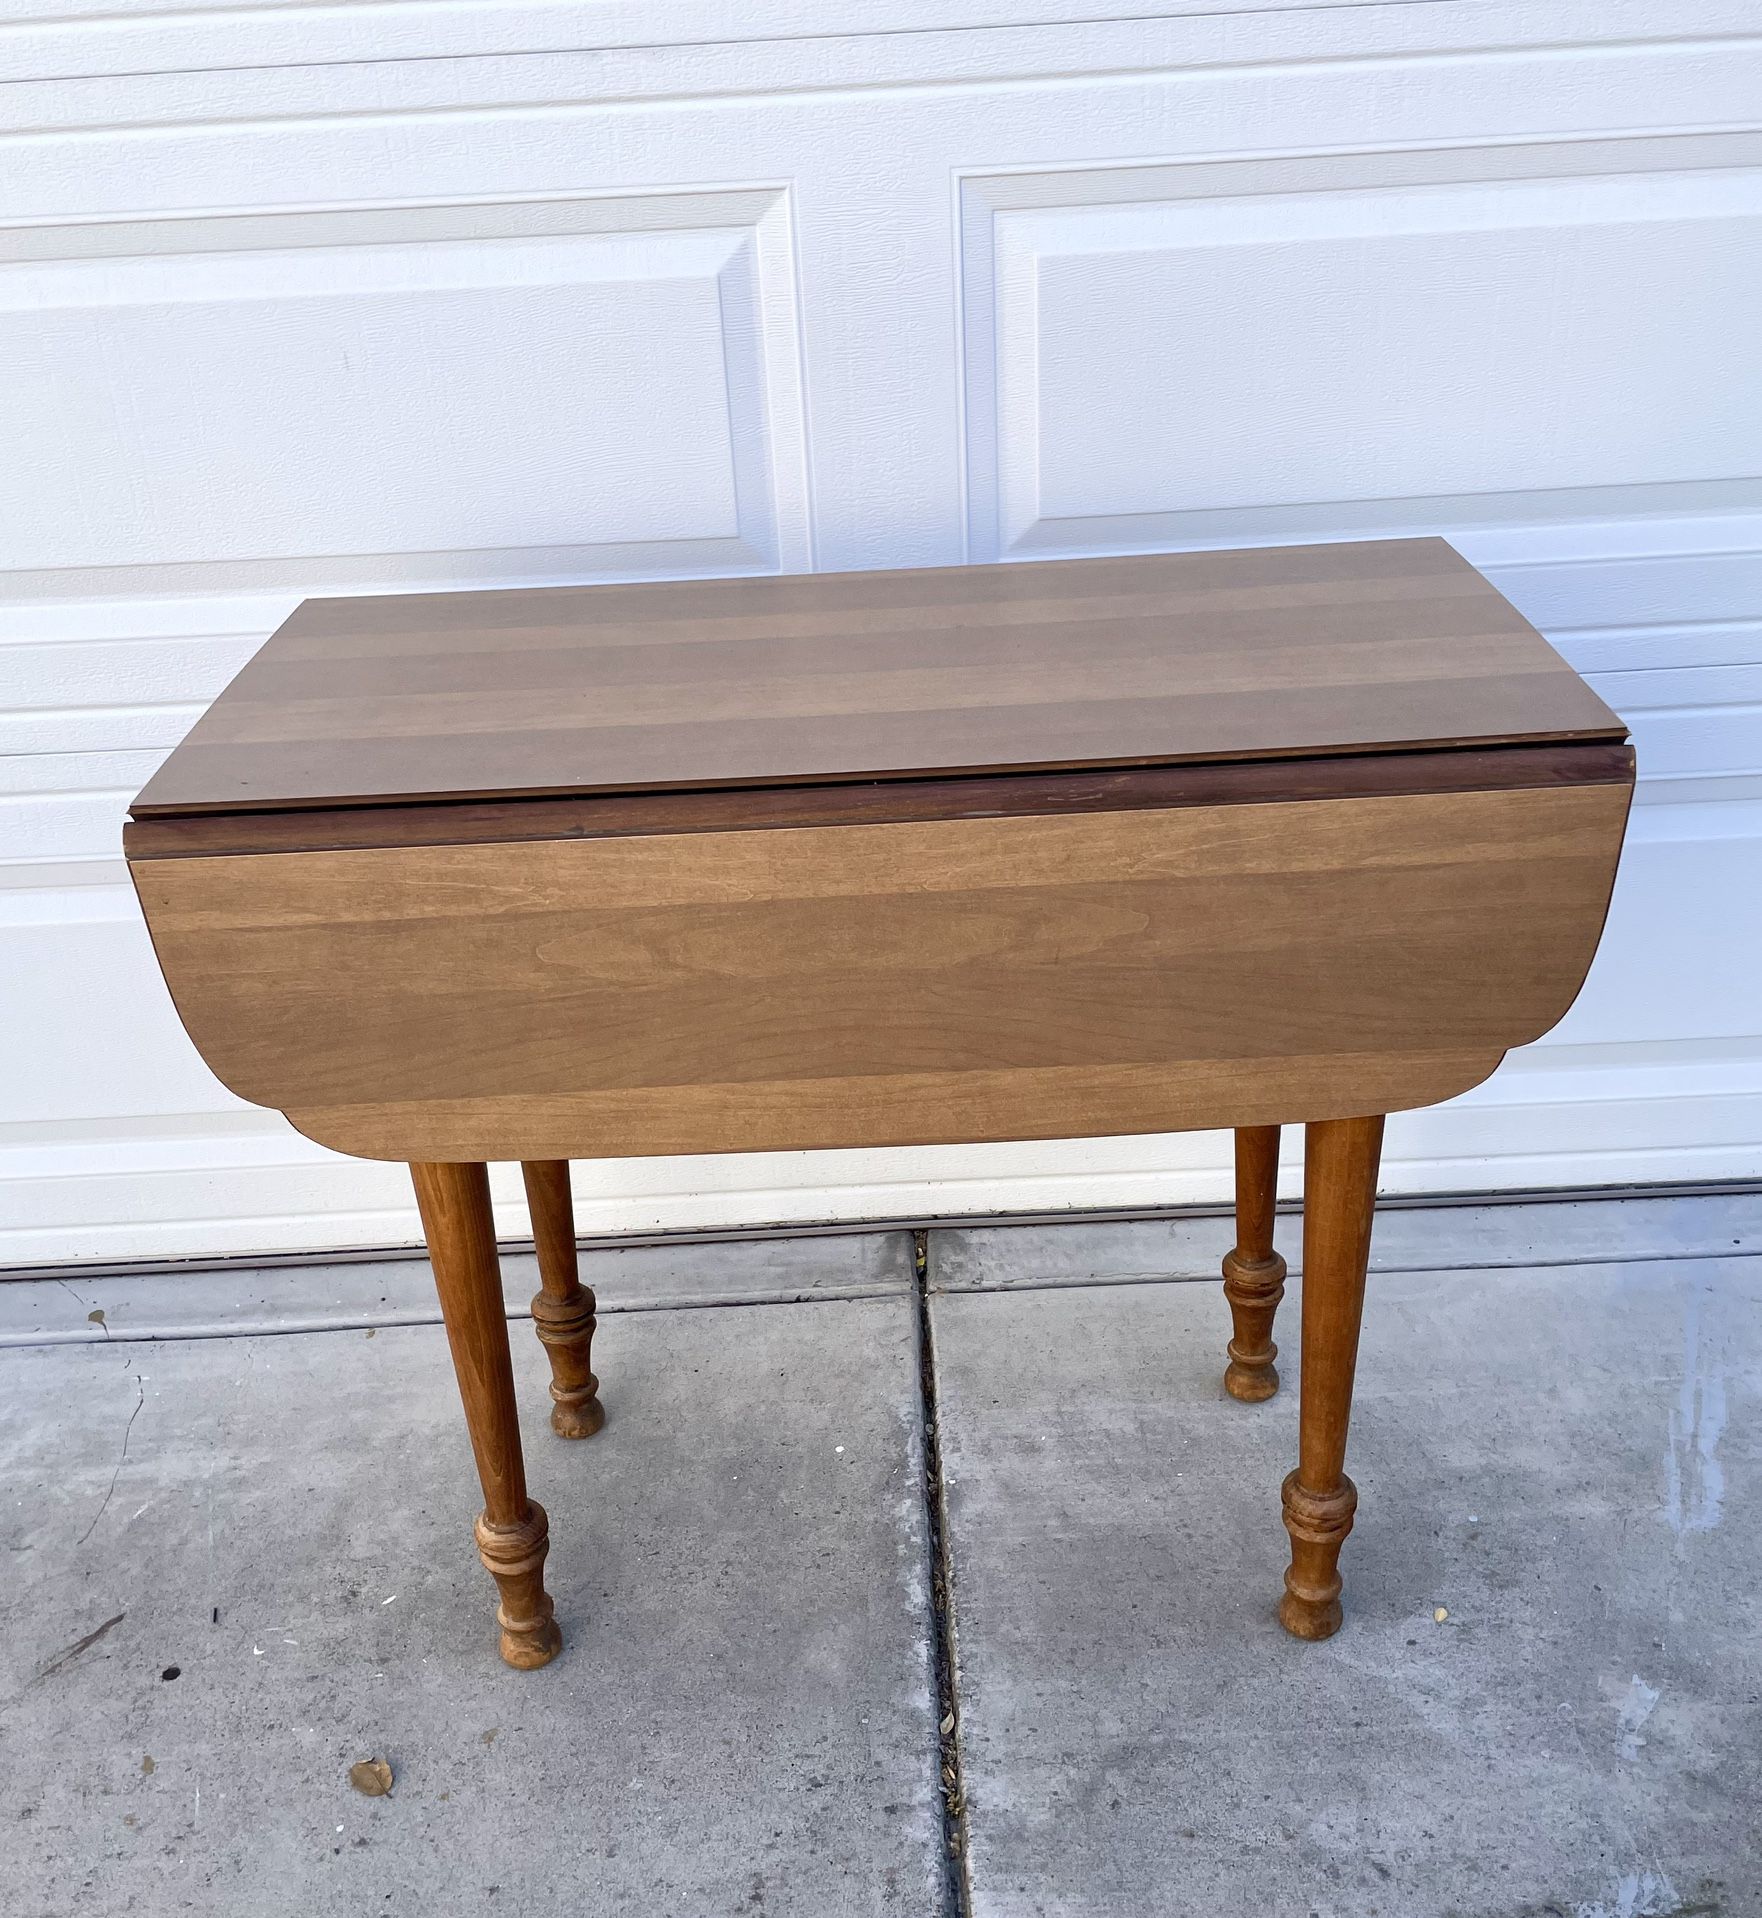 Project Piece - Vintage Table